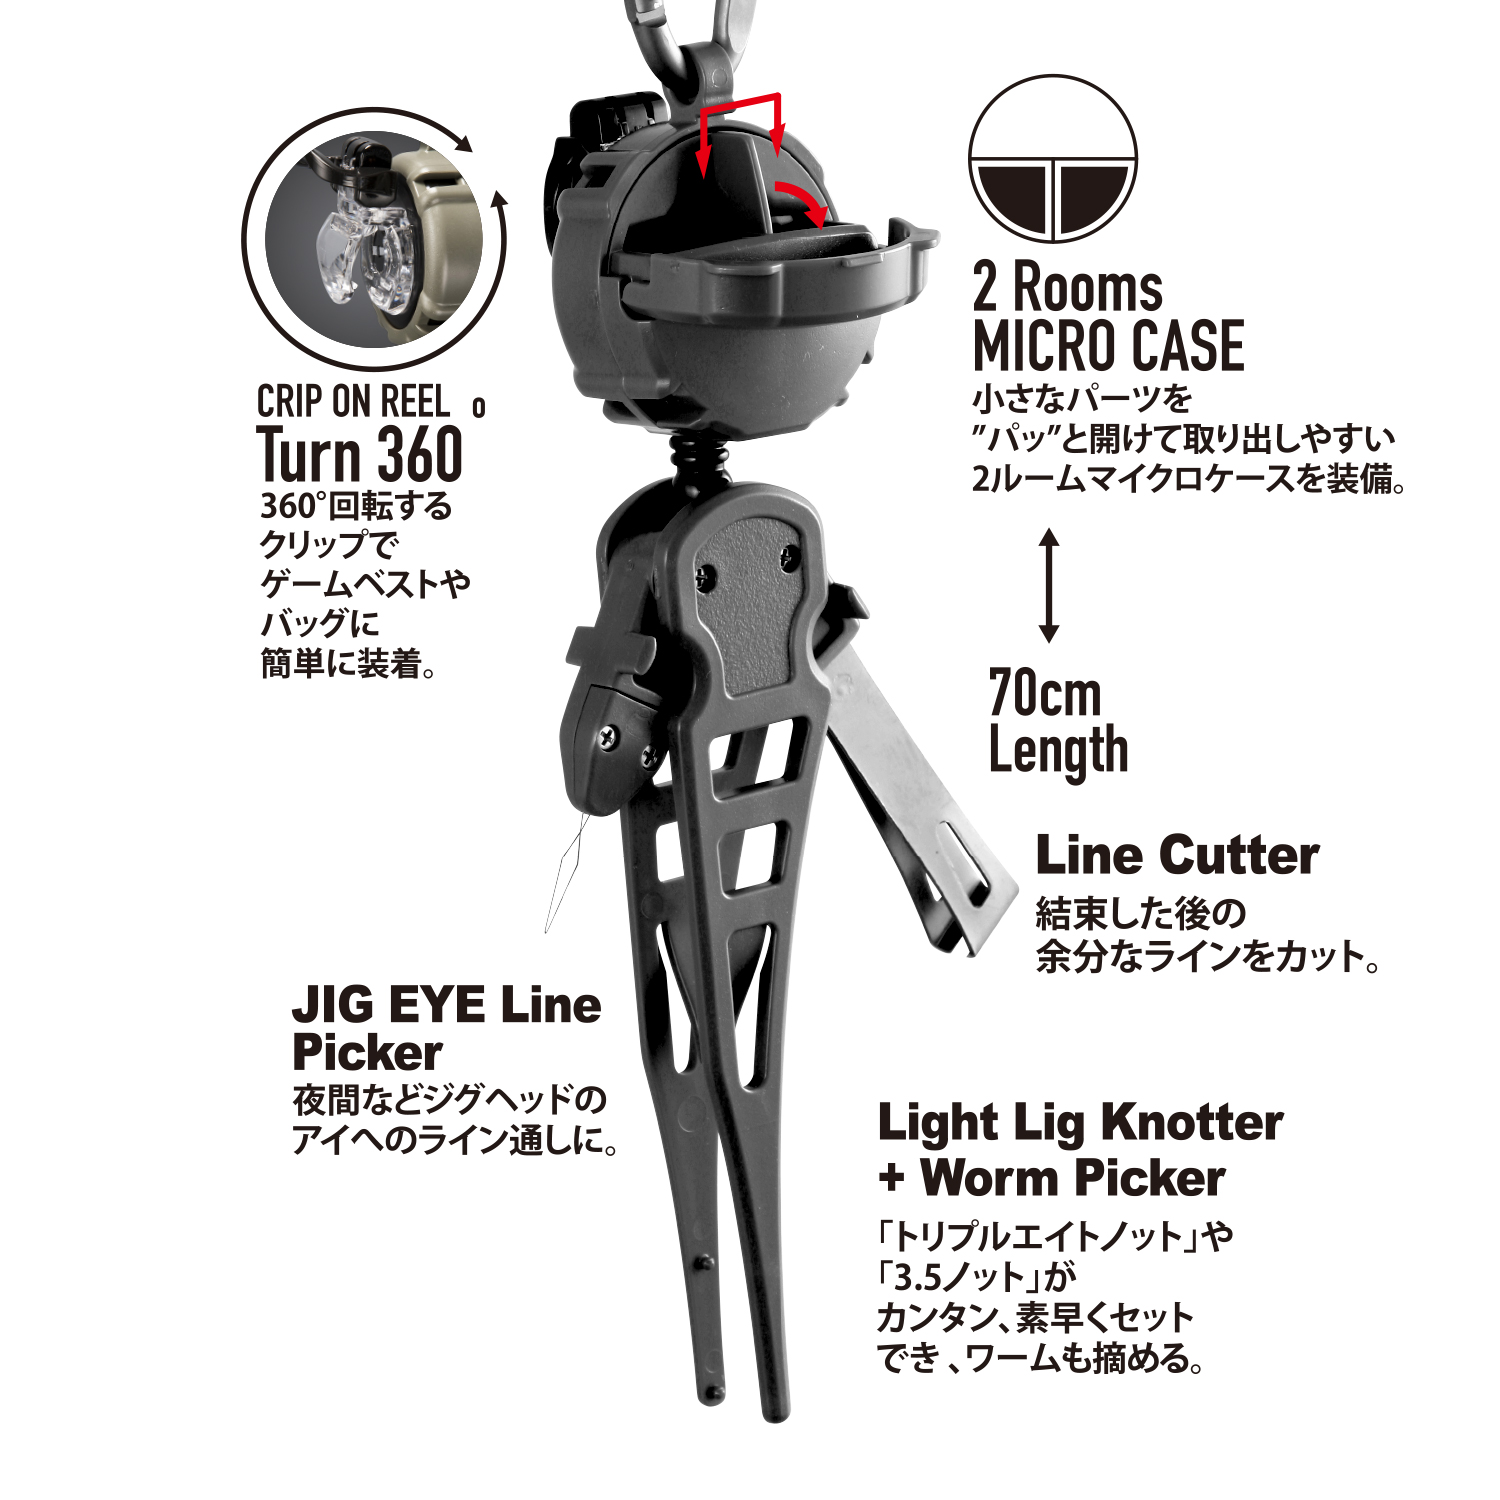 Product Details｜Dai-ichi Seiko Co., Ltd.